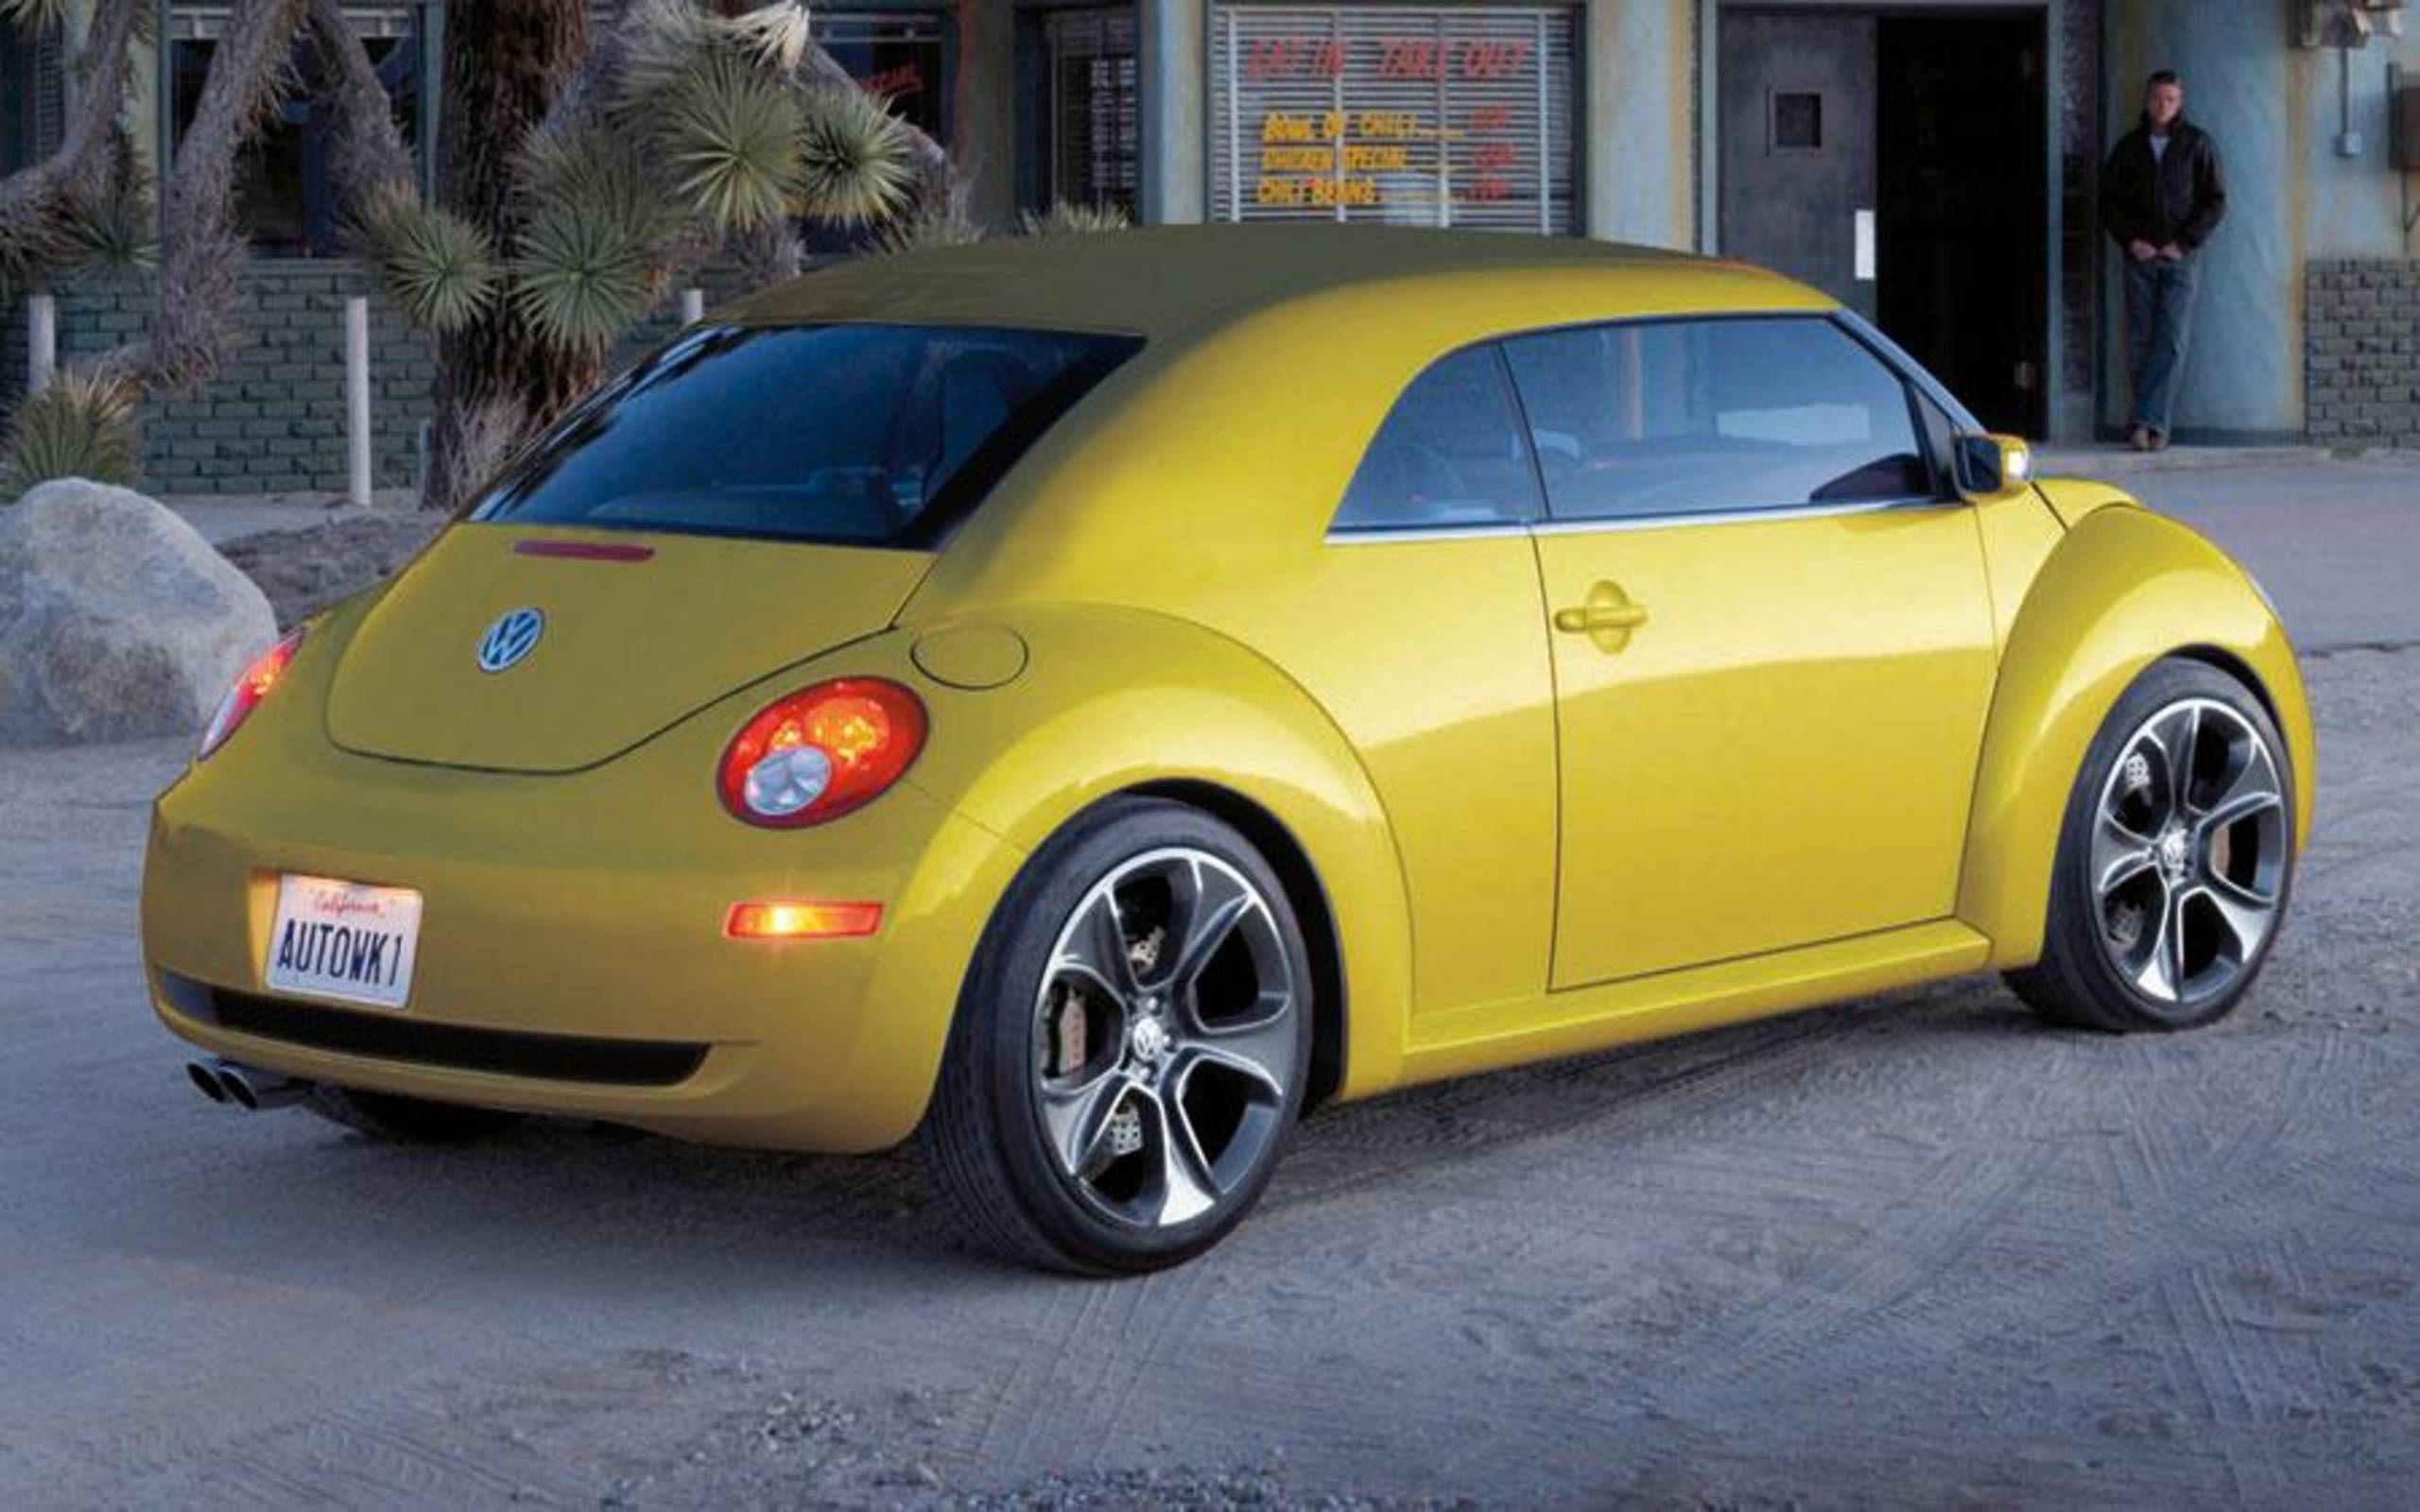 Volkswagen has plans for yet another Beetle